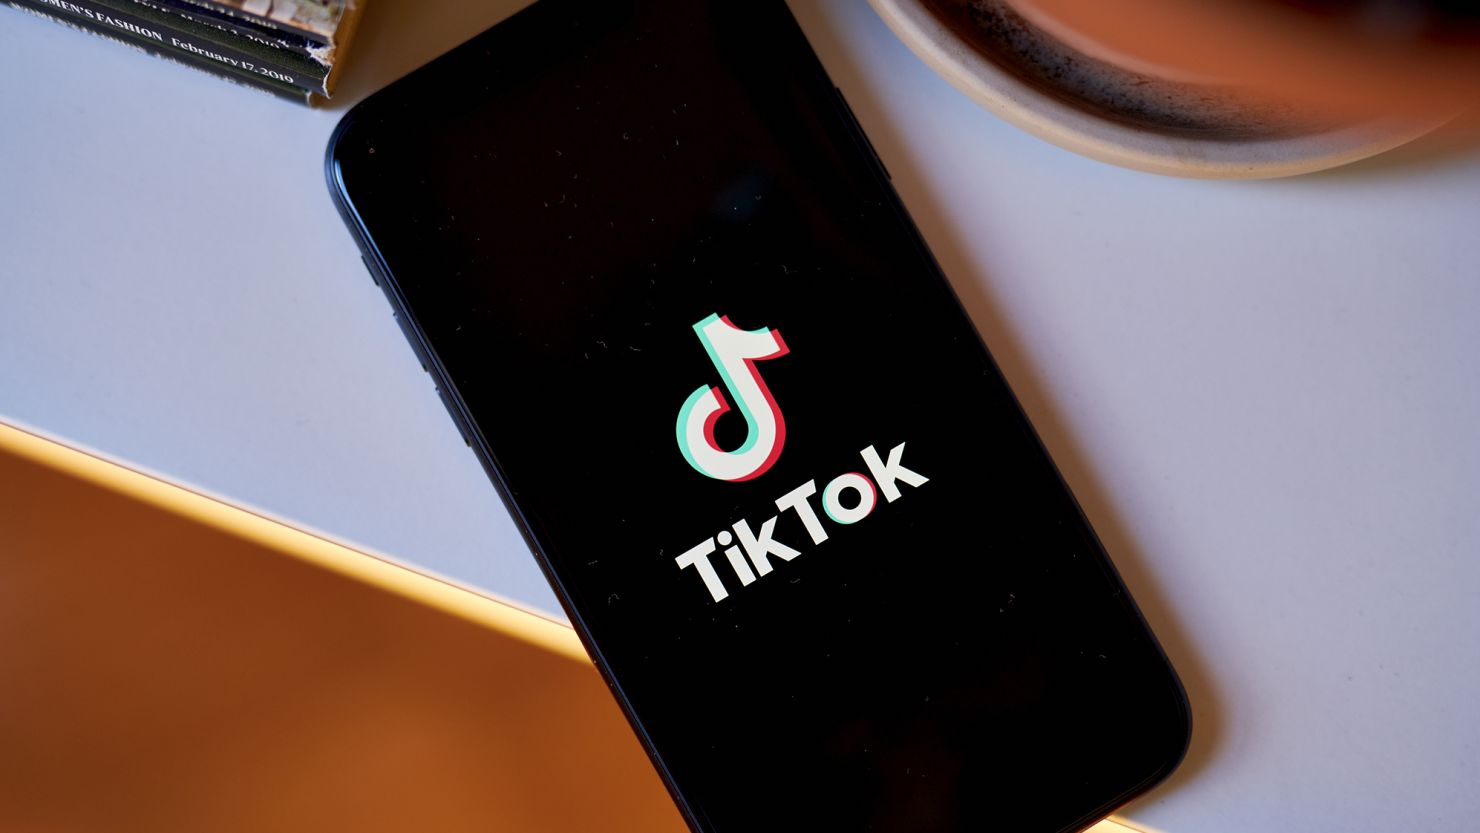 The TikTok logo on a smartphone